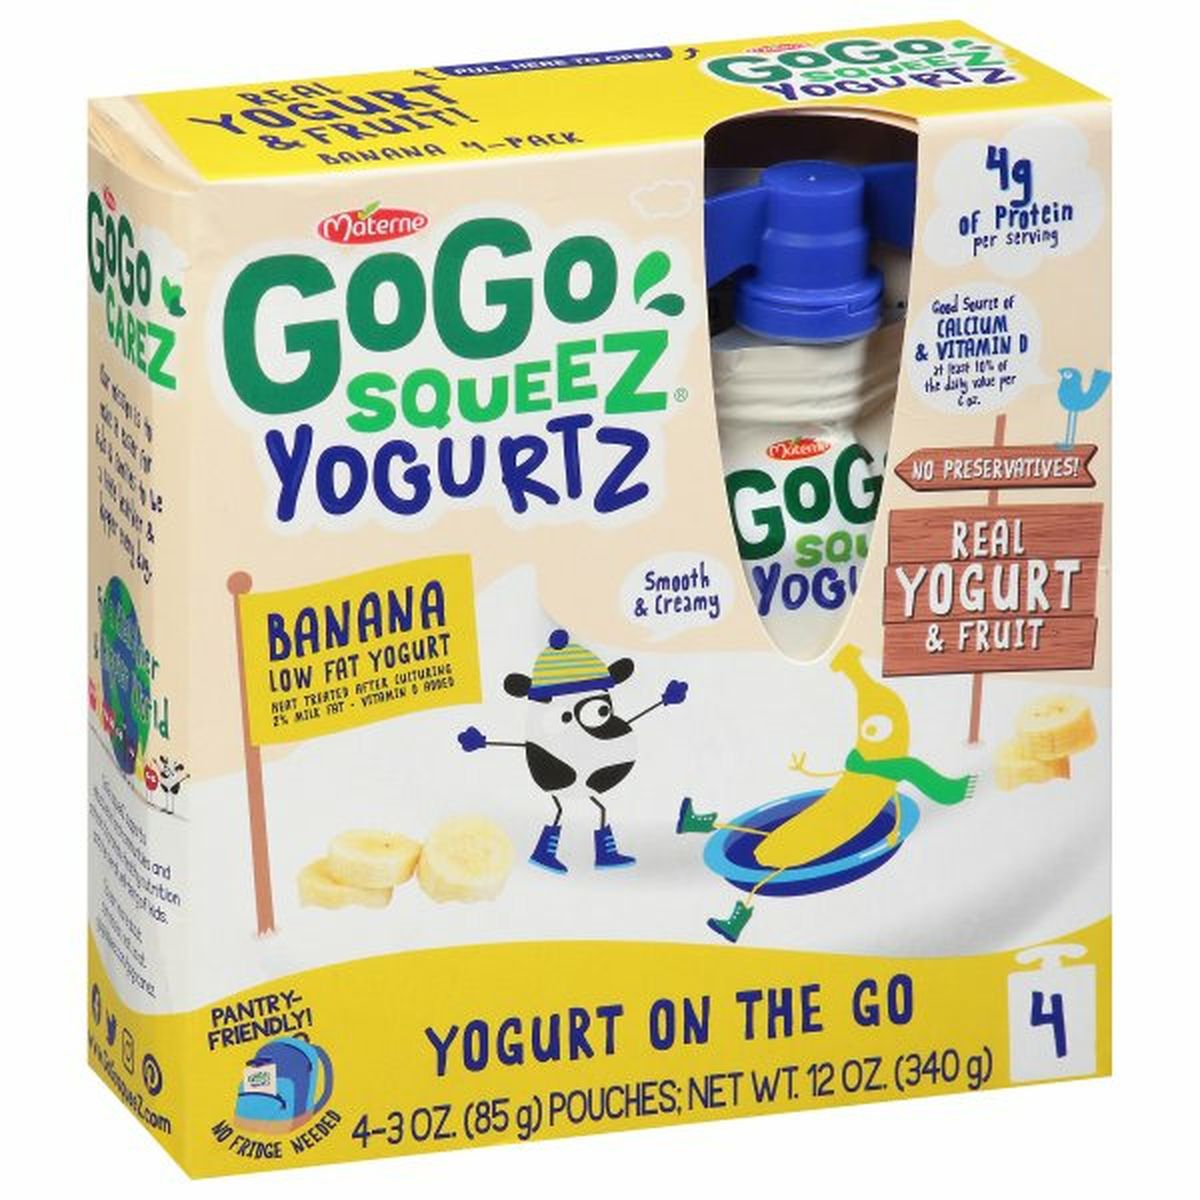 Calories in GoGo Squeez Yogurt, Low Fat, Banana, 4-Pack